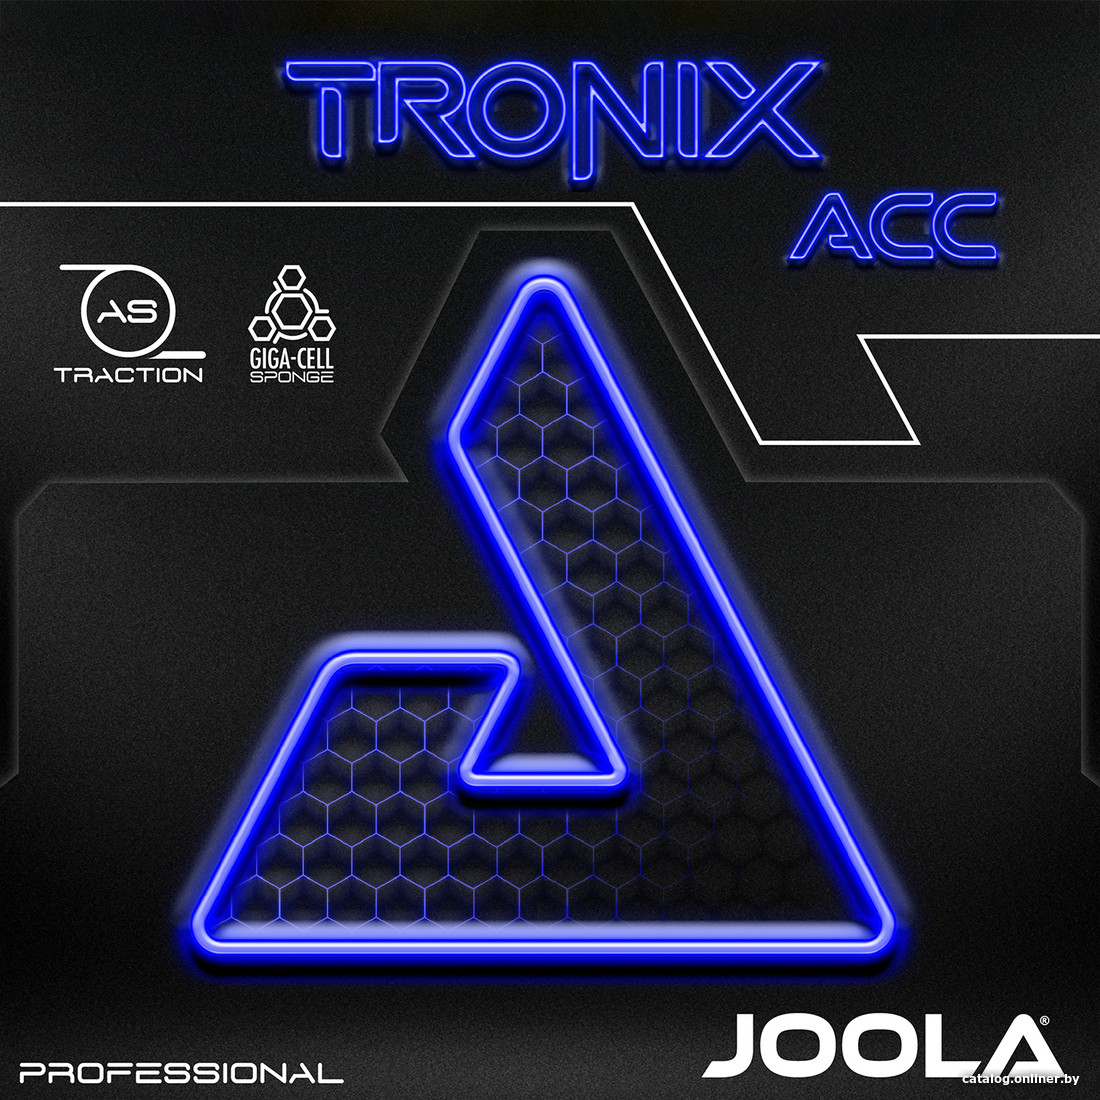 

Накладка на ракетку Joola Tronix ACC (max+, черный)